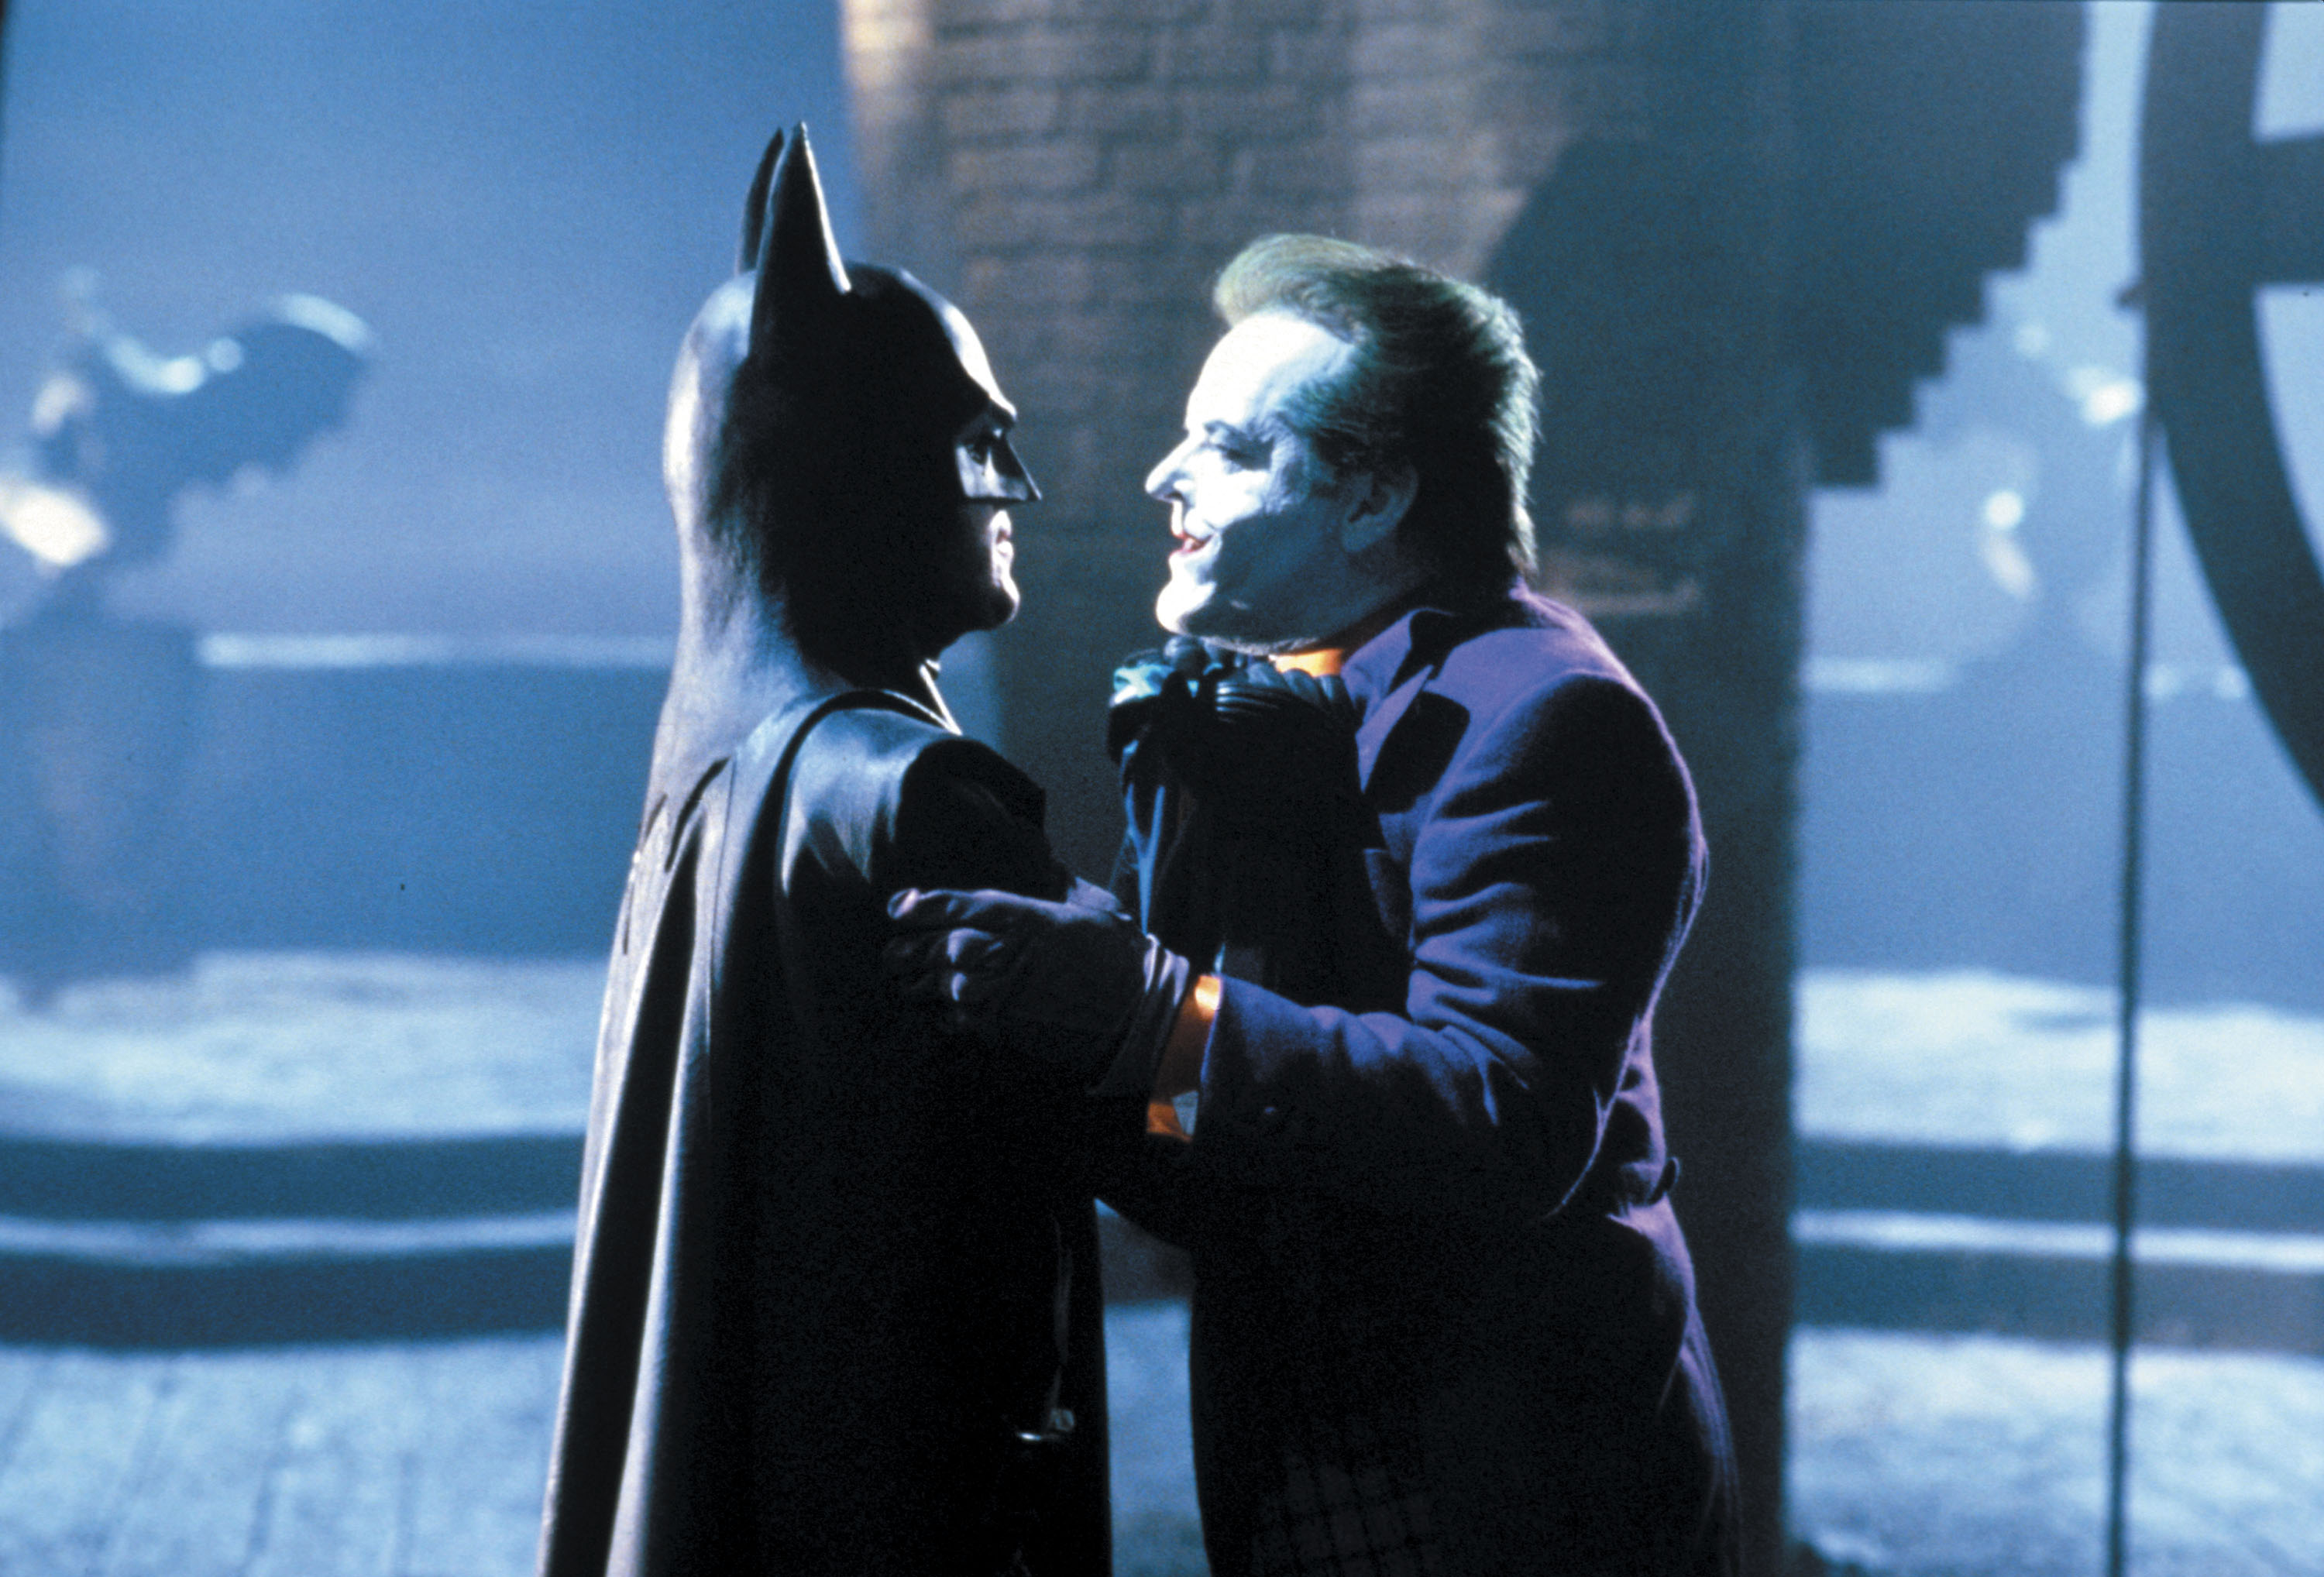 Burton batman. Джек Николсон Бэтмен 1989. Бэтмен тим бёртон 1989.